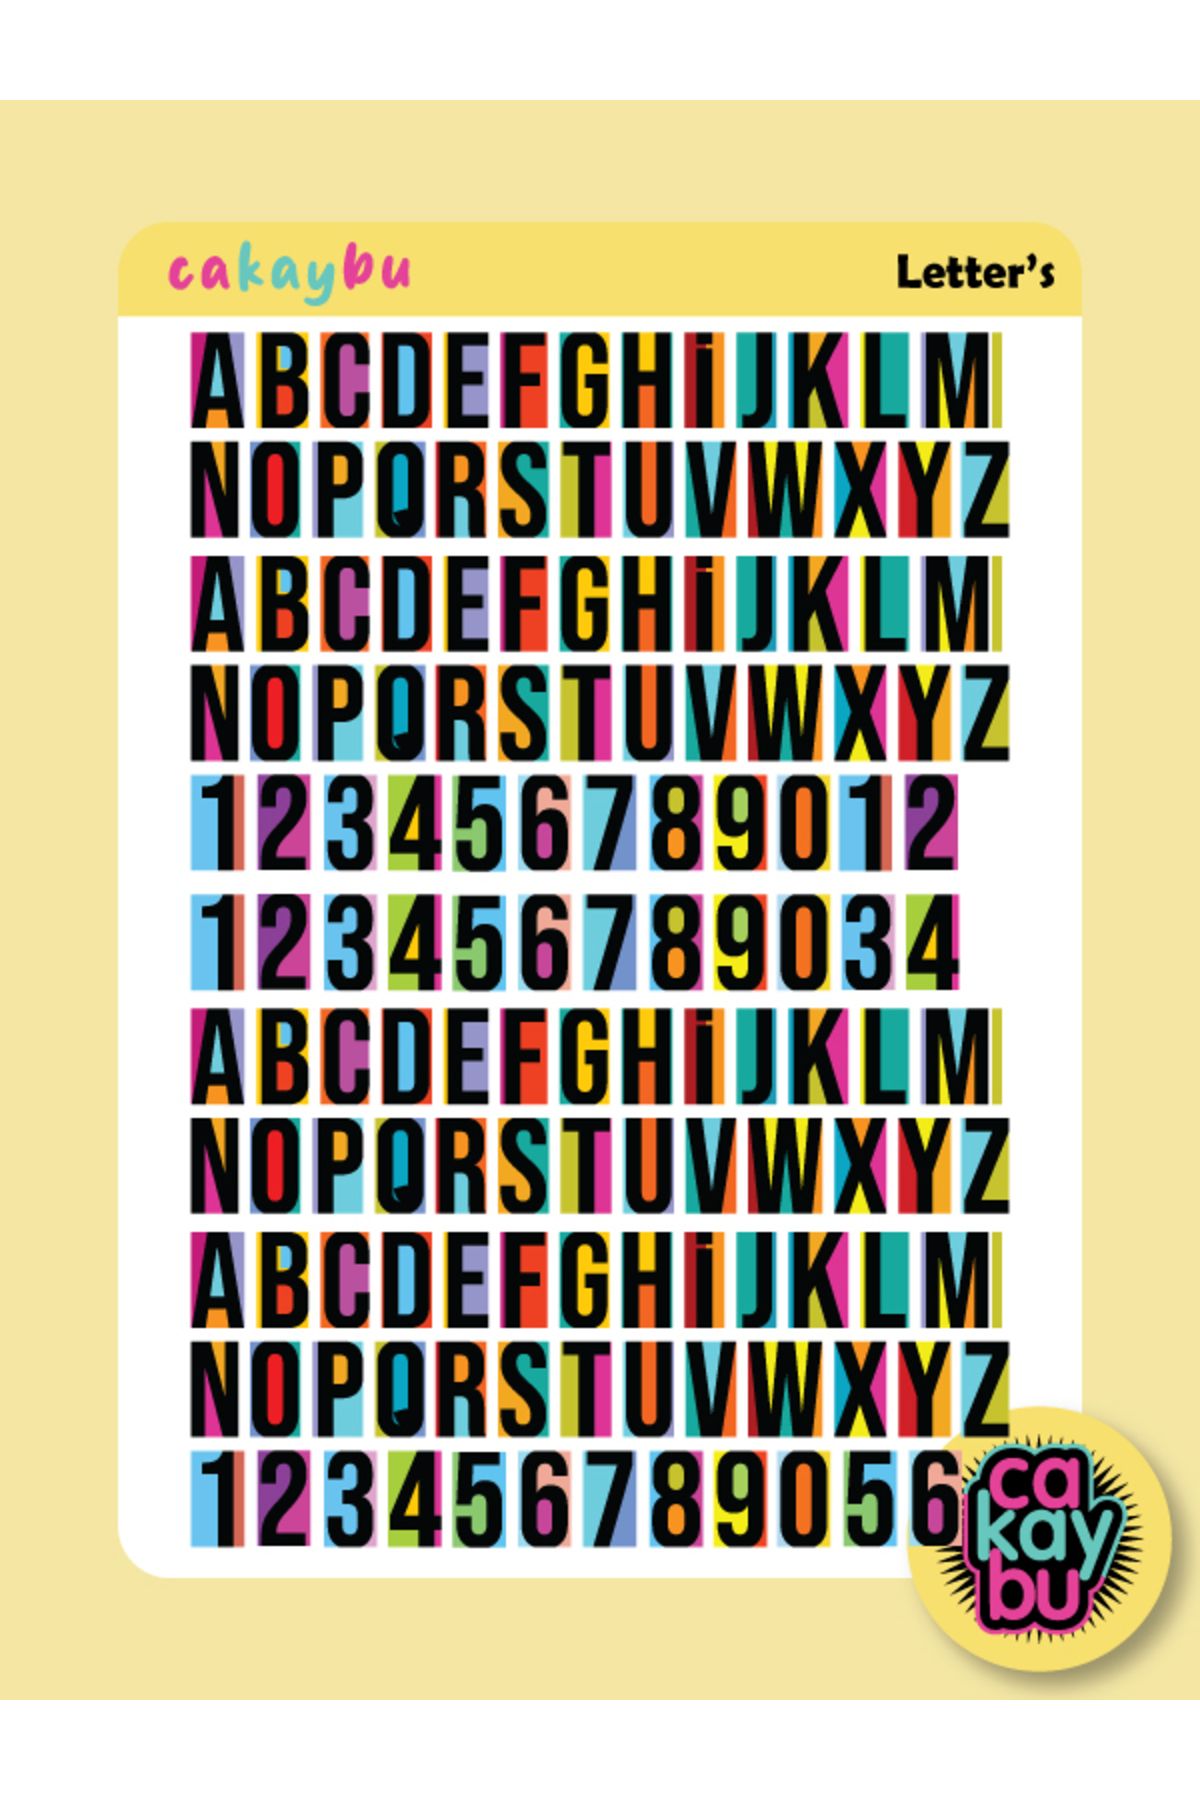 cakaybu Harf Letters Set Sticker